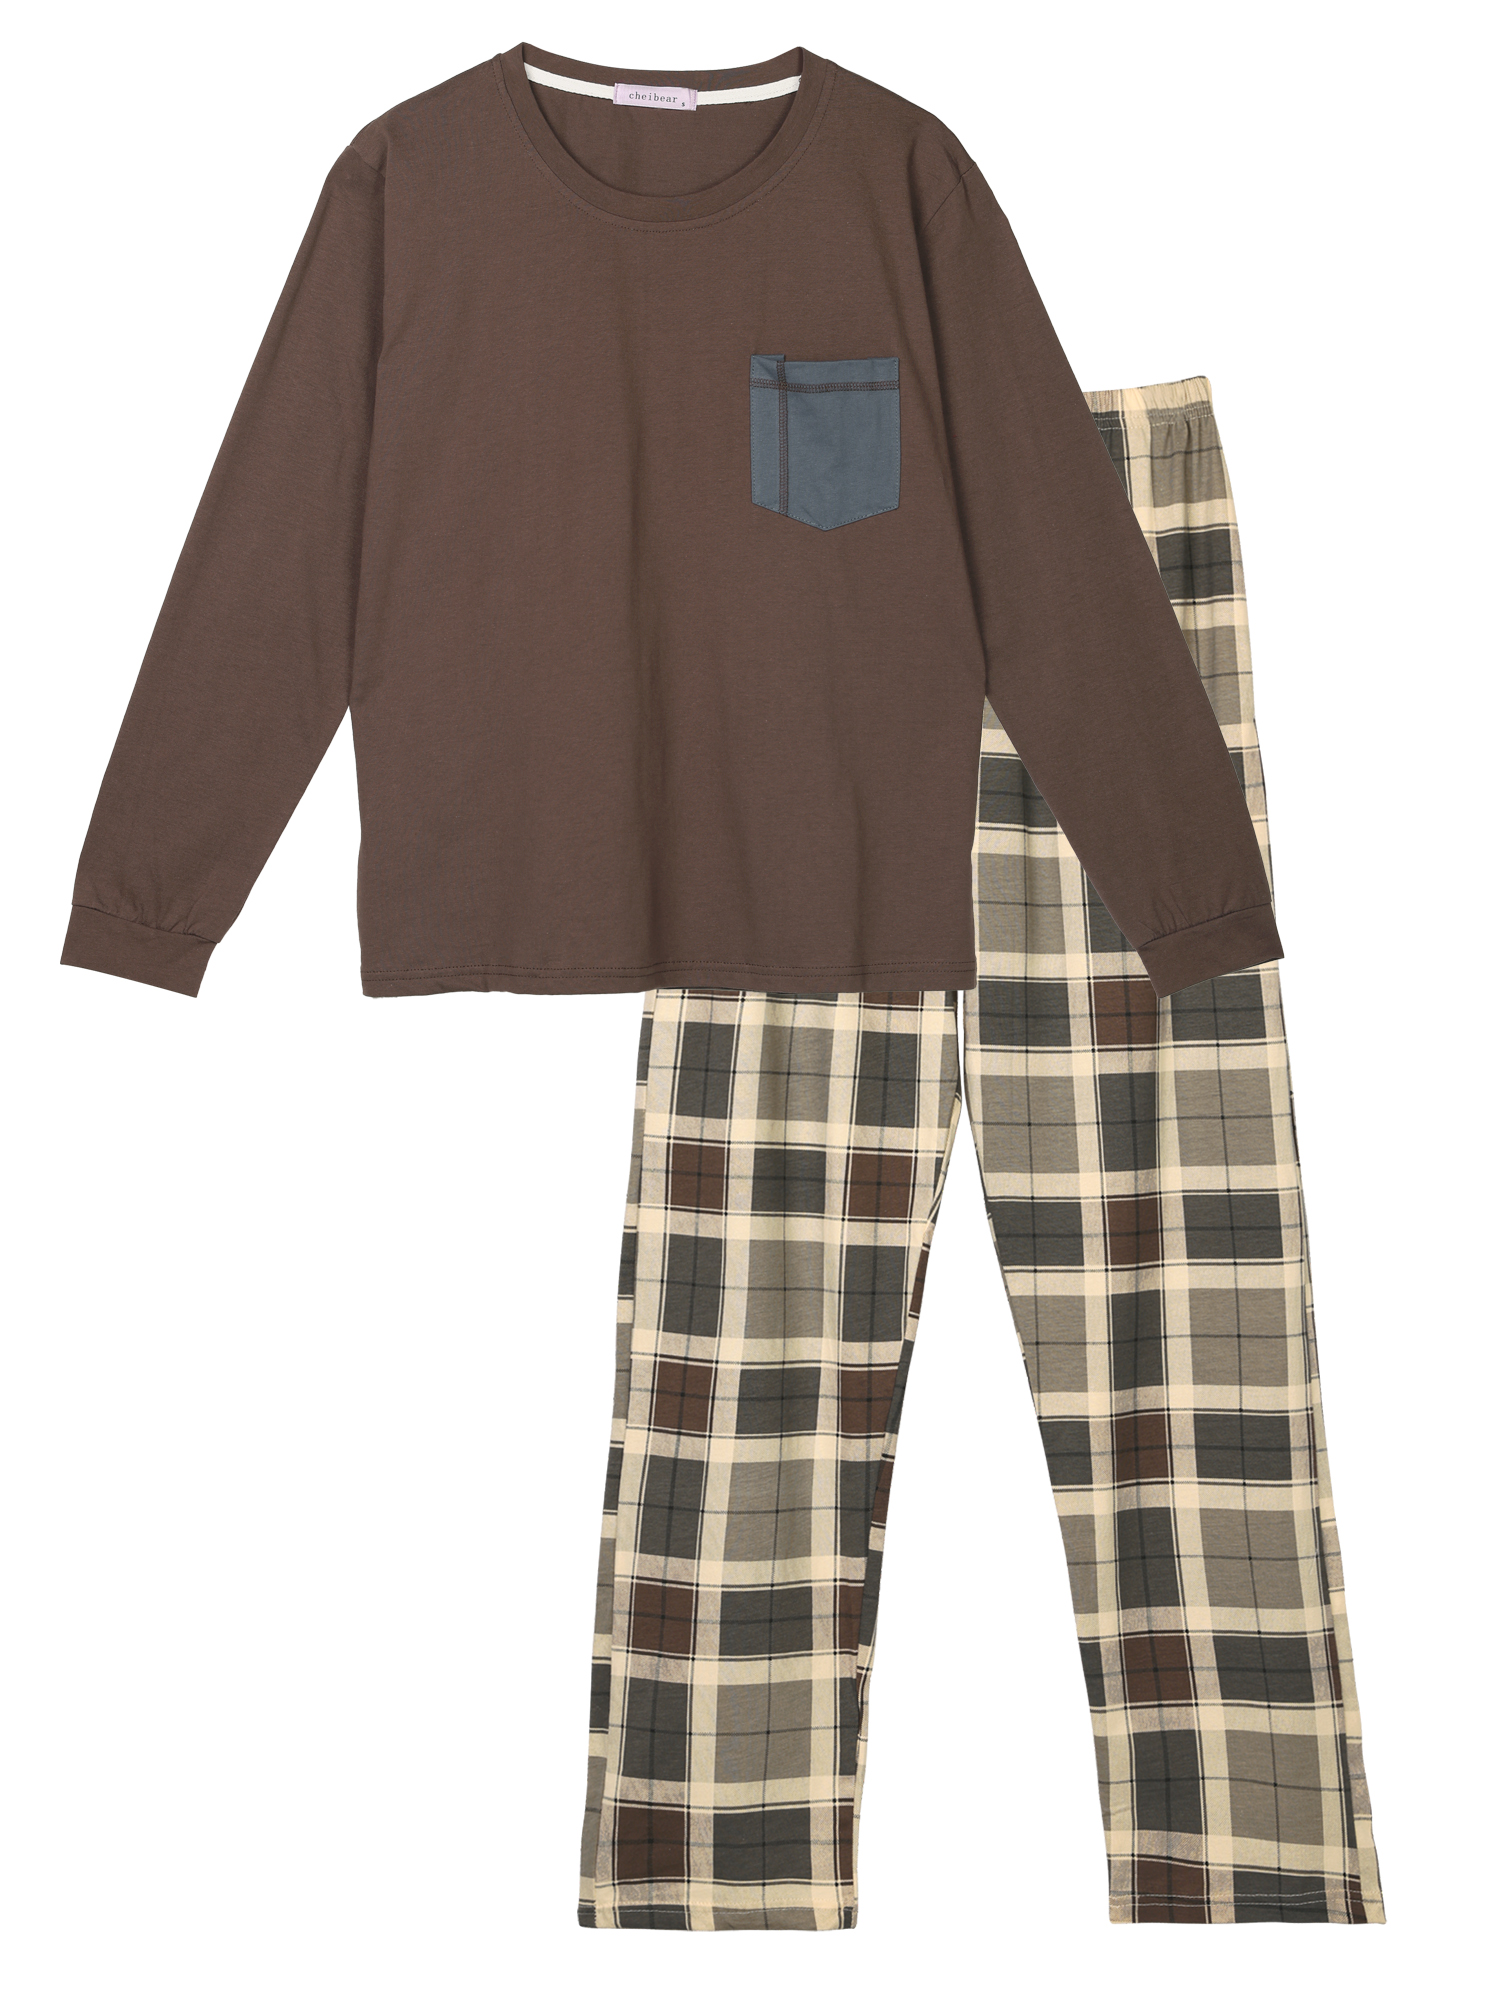 Unique Bargains Men’s Sleepwear Long Sleeve with Pants Plaid Family Pajama Sets